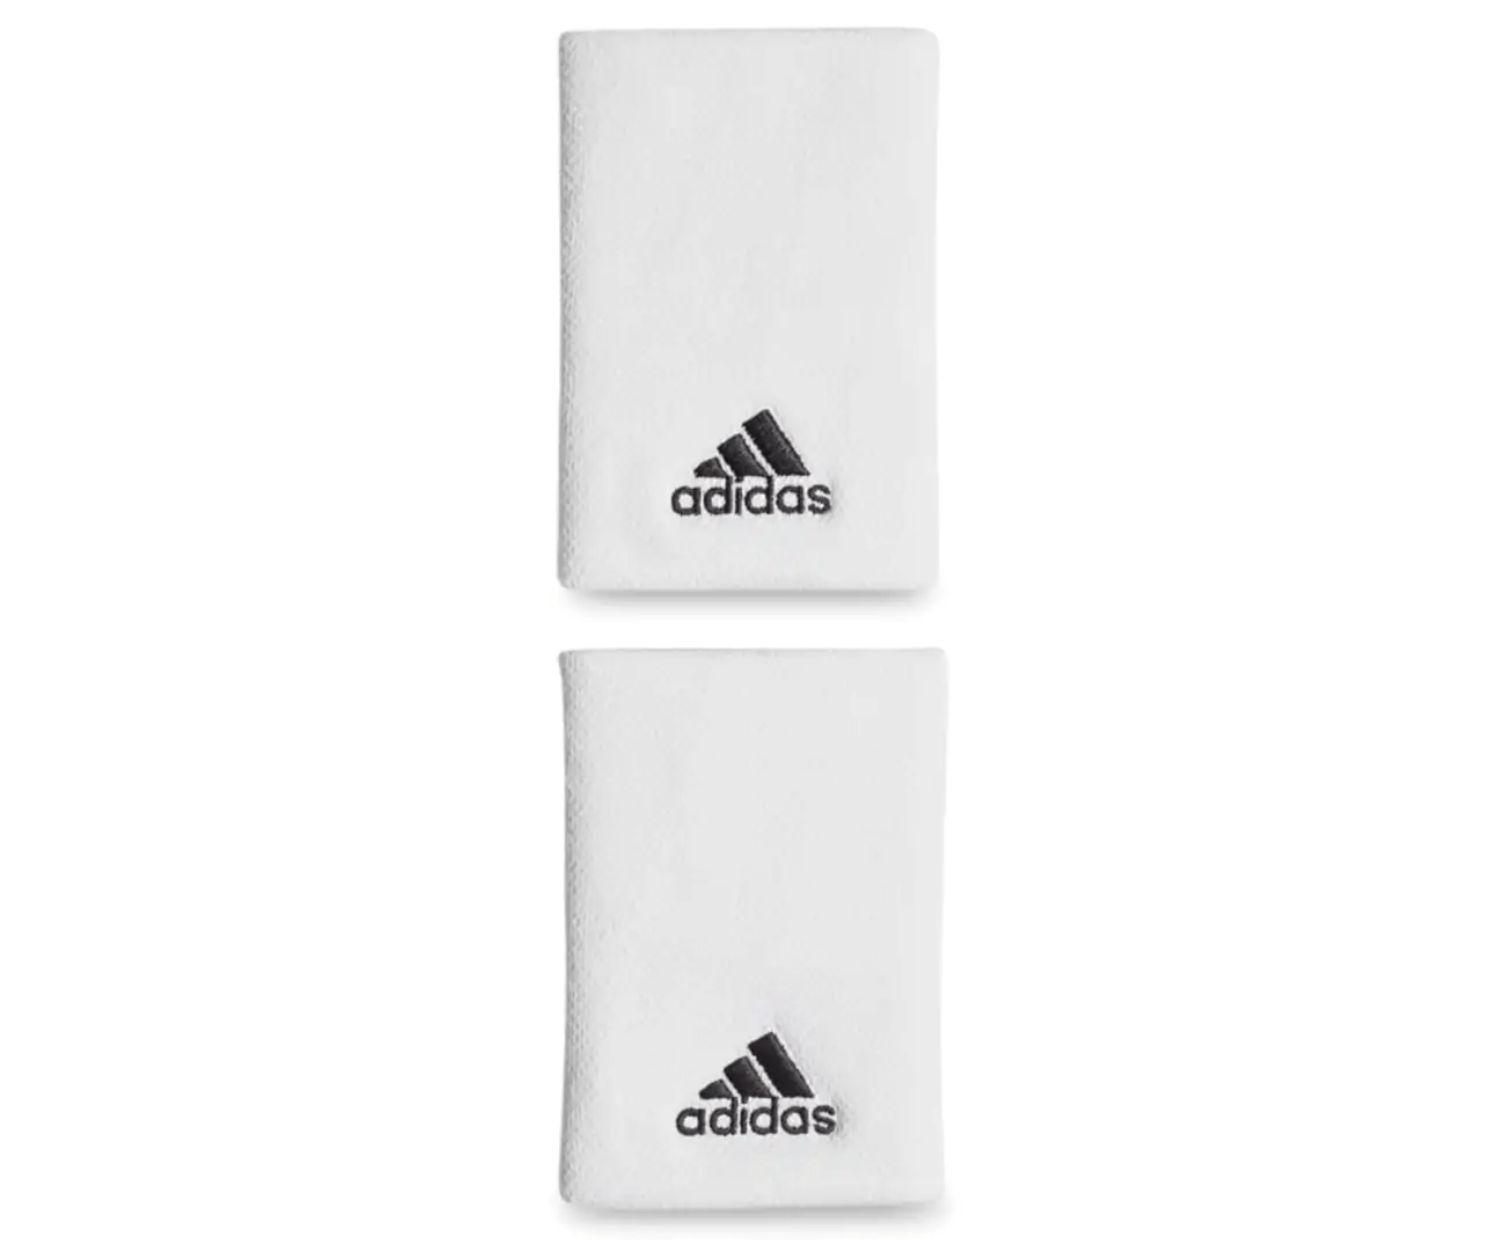 Adidas Unisex Size Tennis Wristband Pair - White/Black, Large